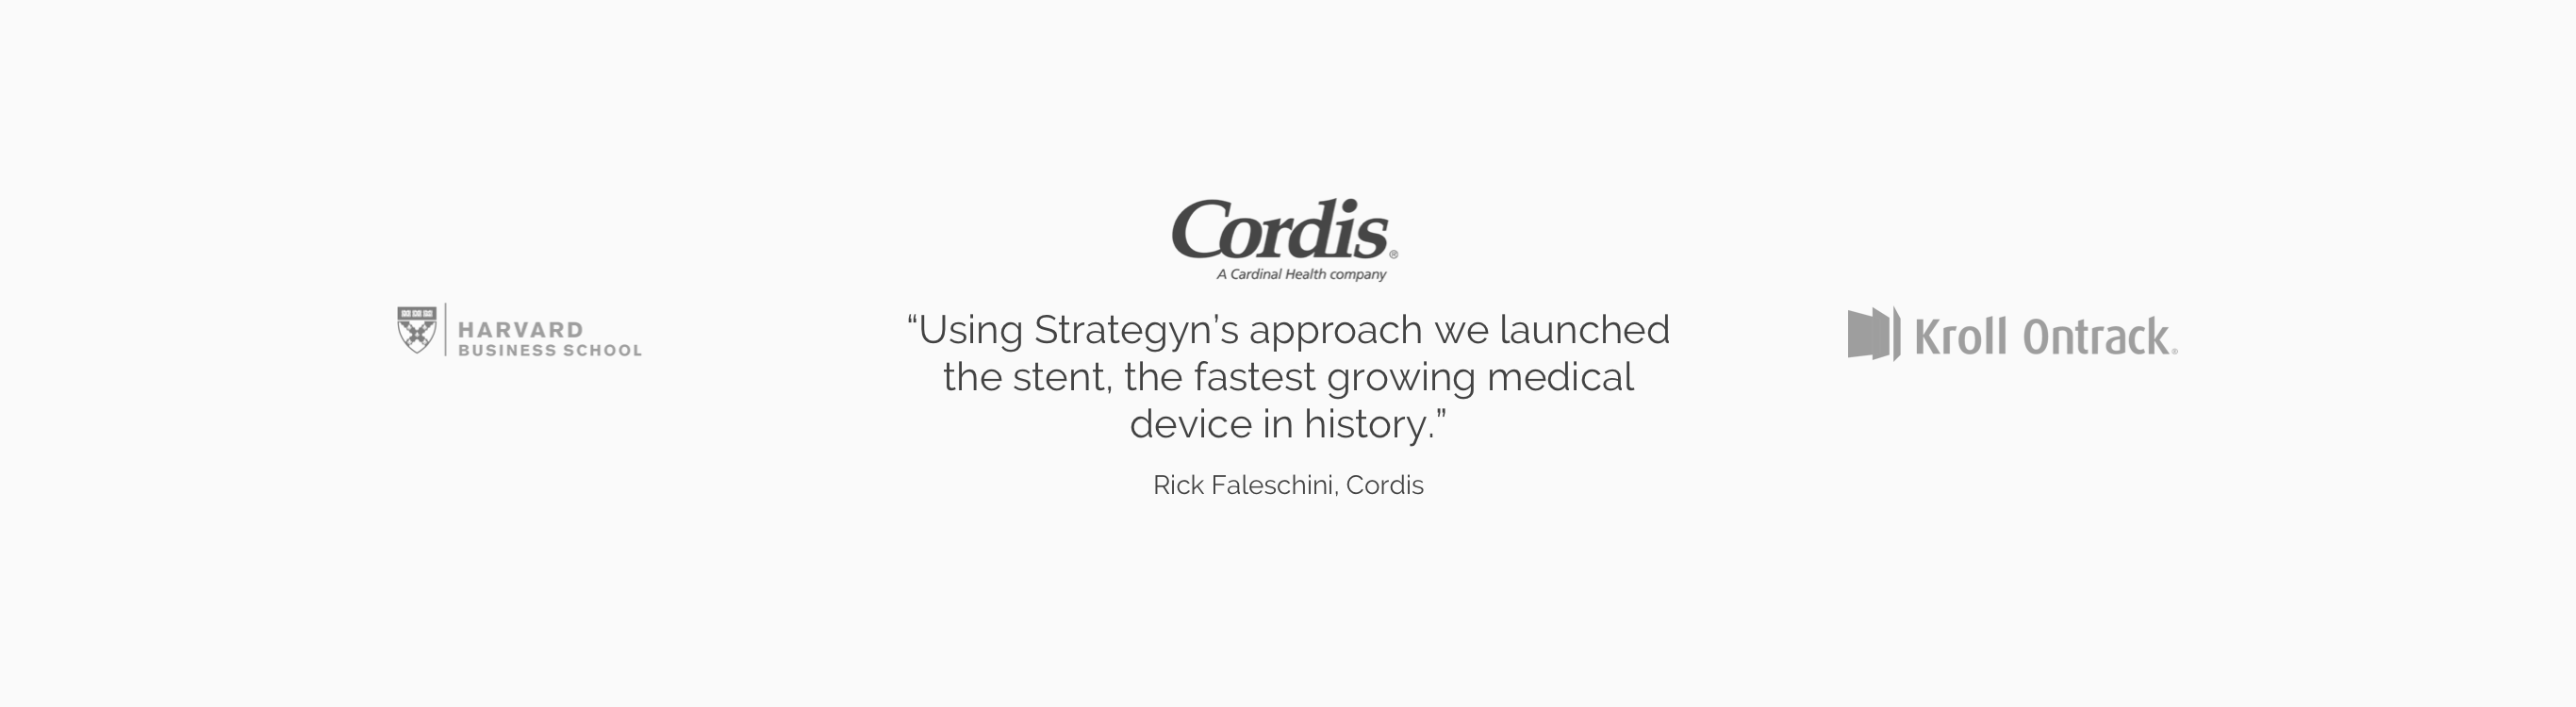 Cordis Outcome Driven Innovation Testimonial